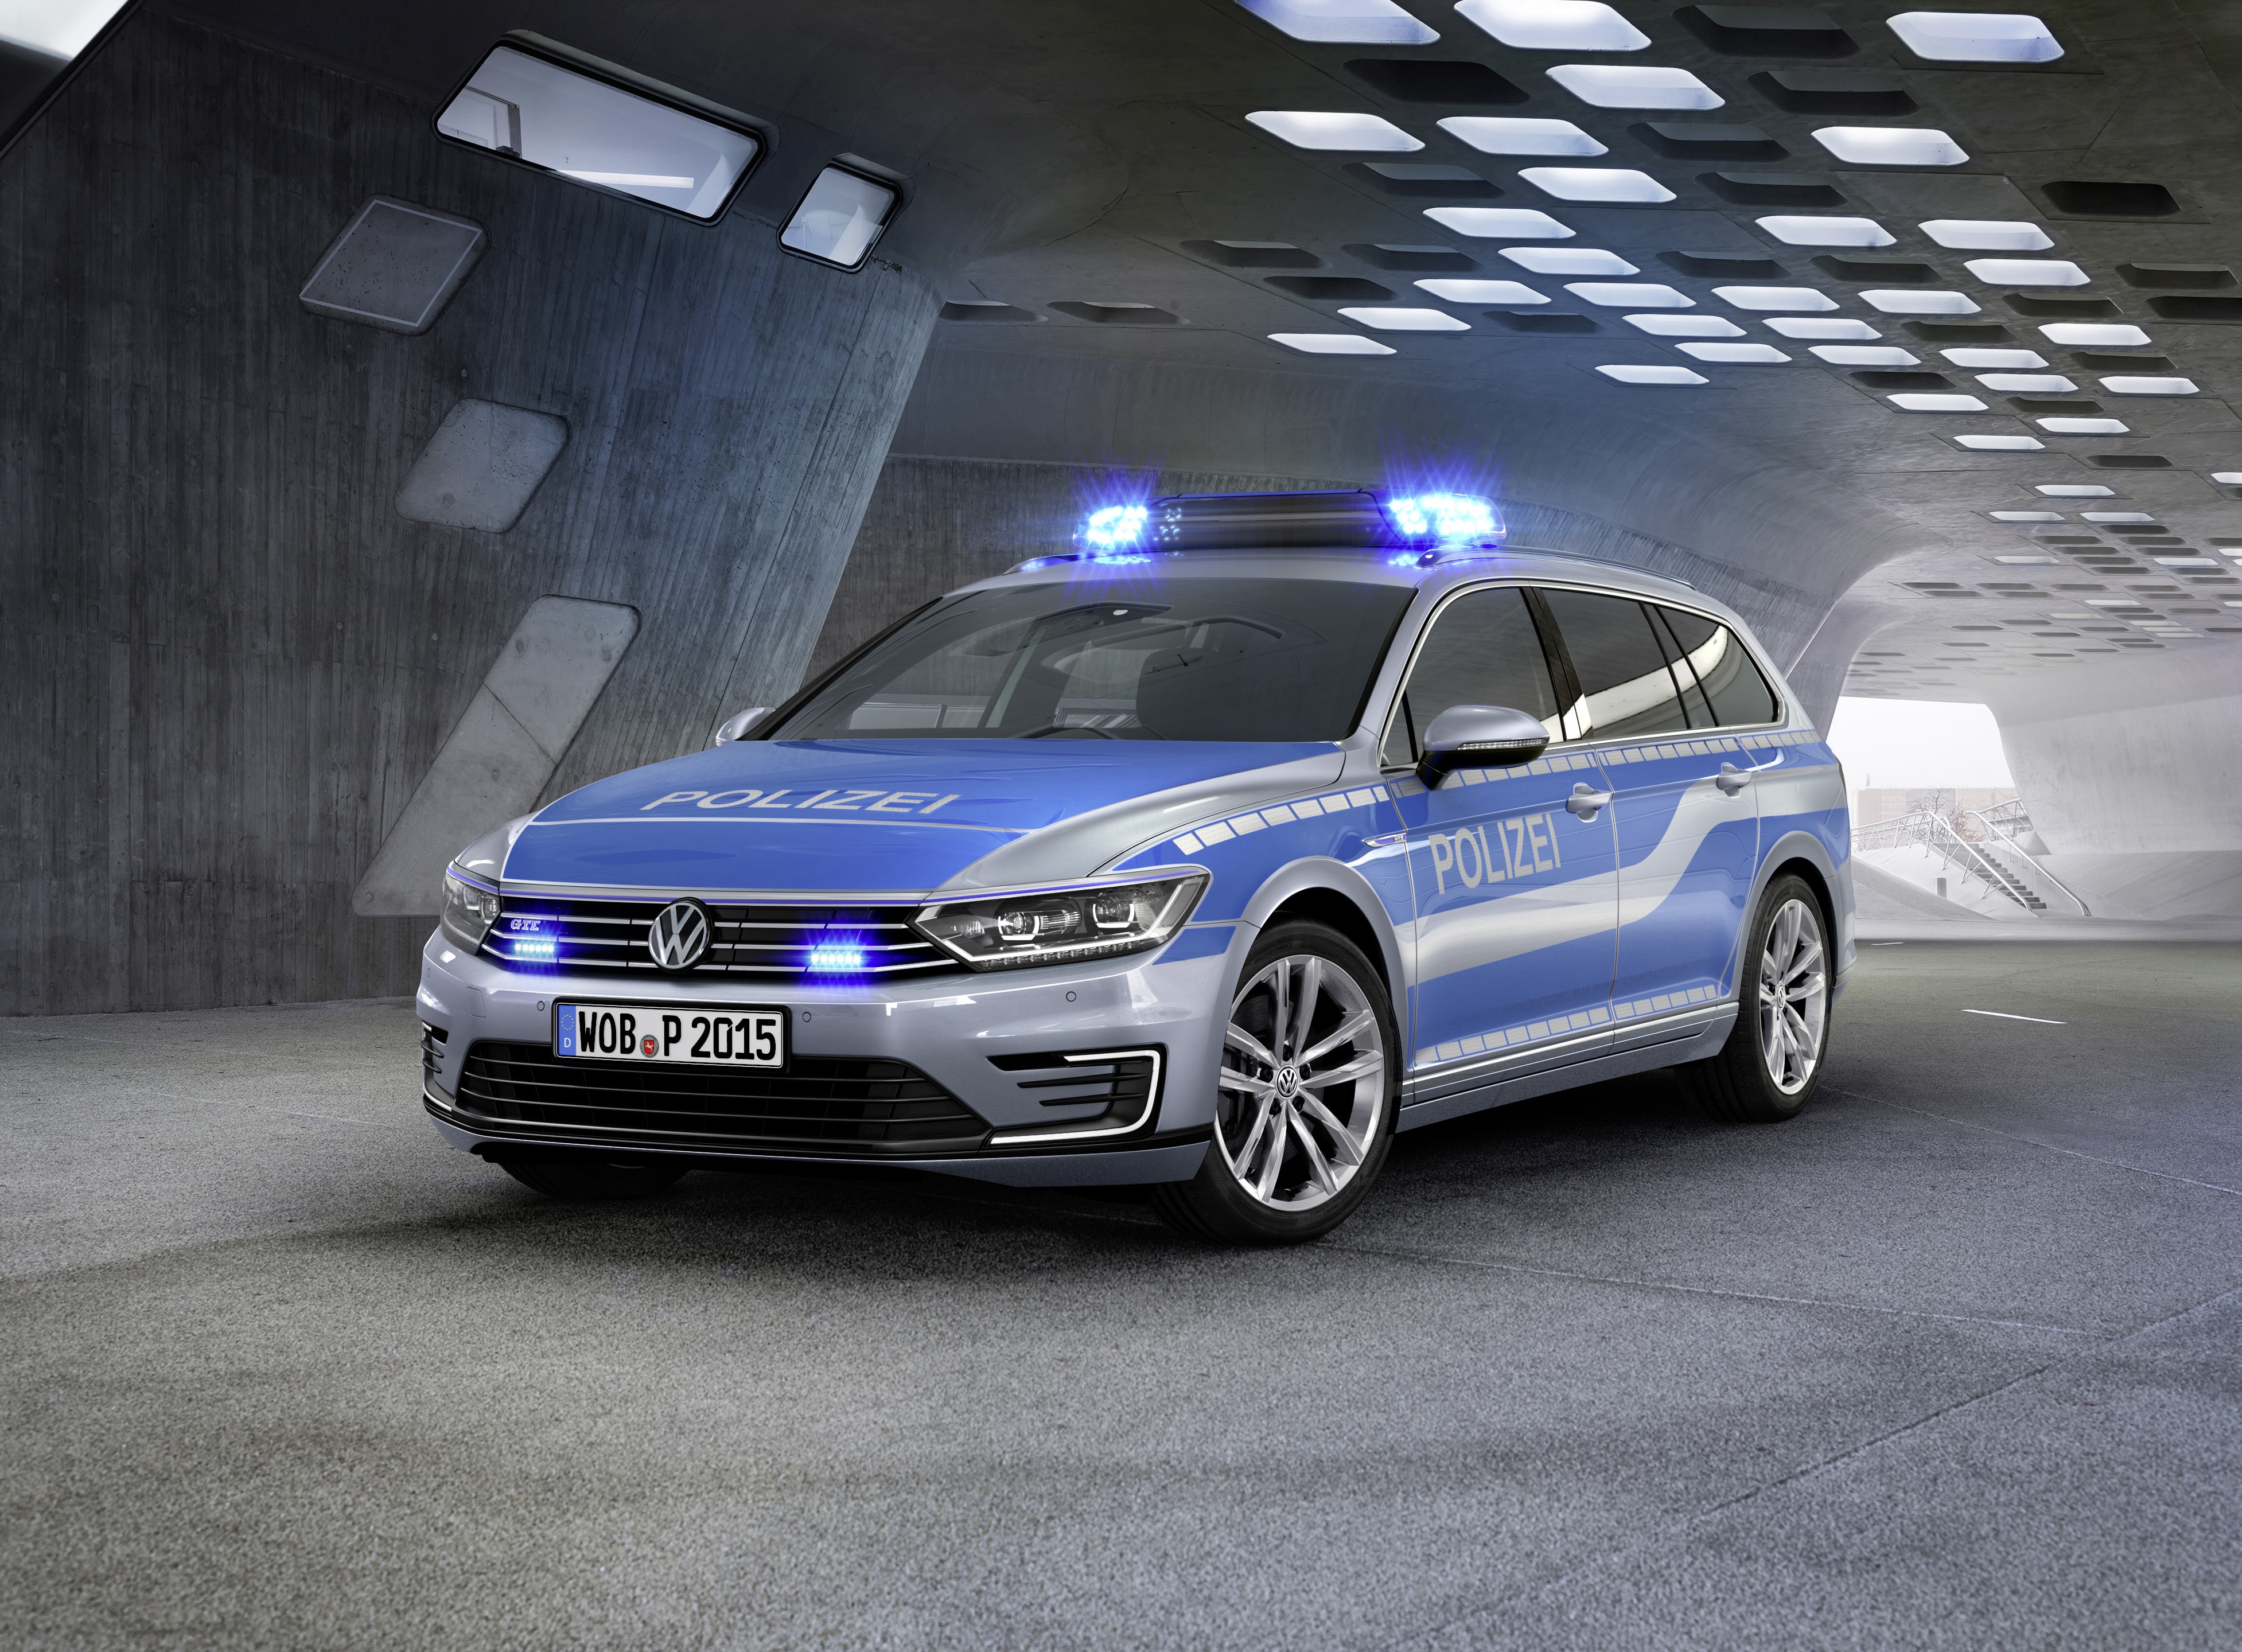 german-police-receives-new-passat-gte-pl